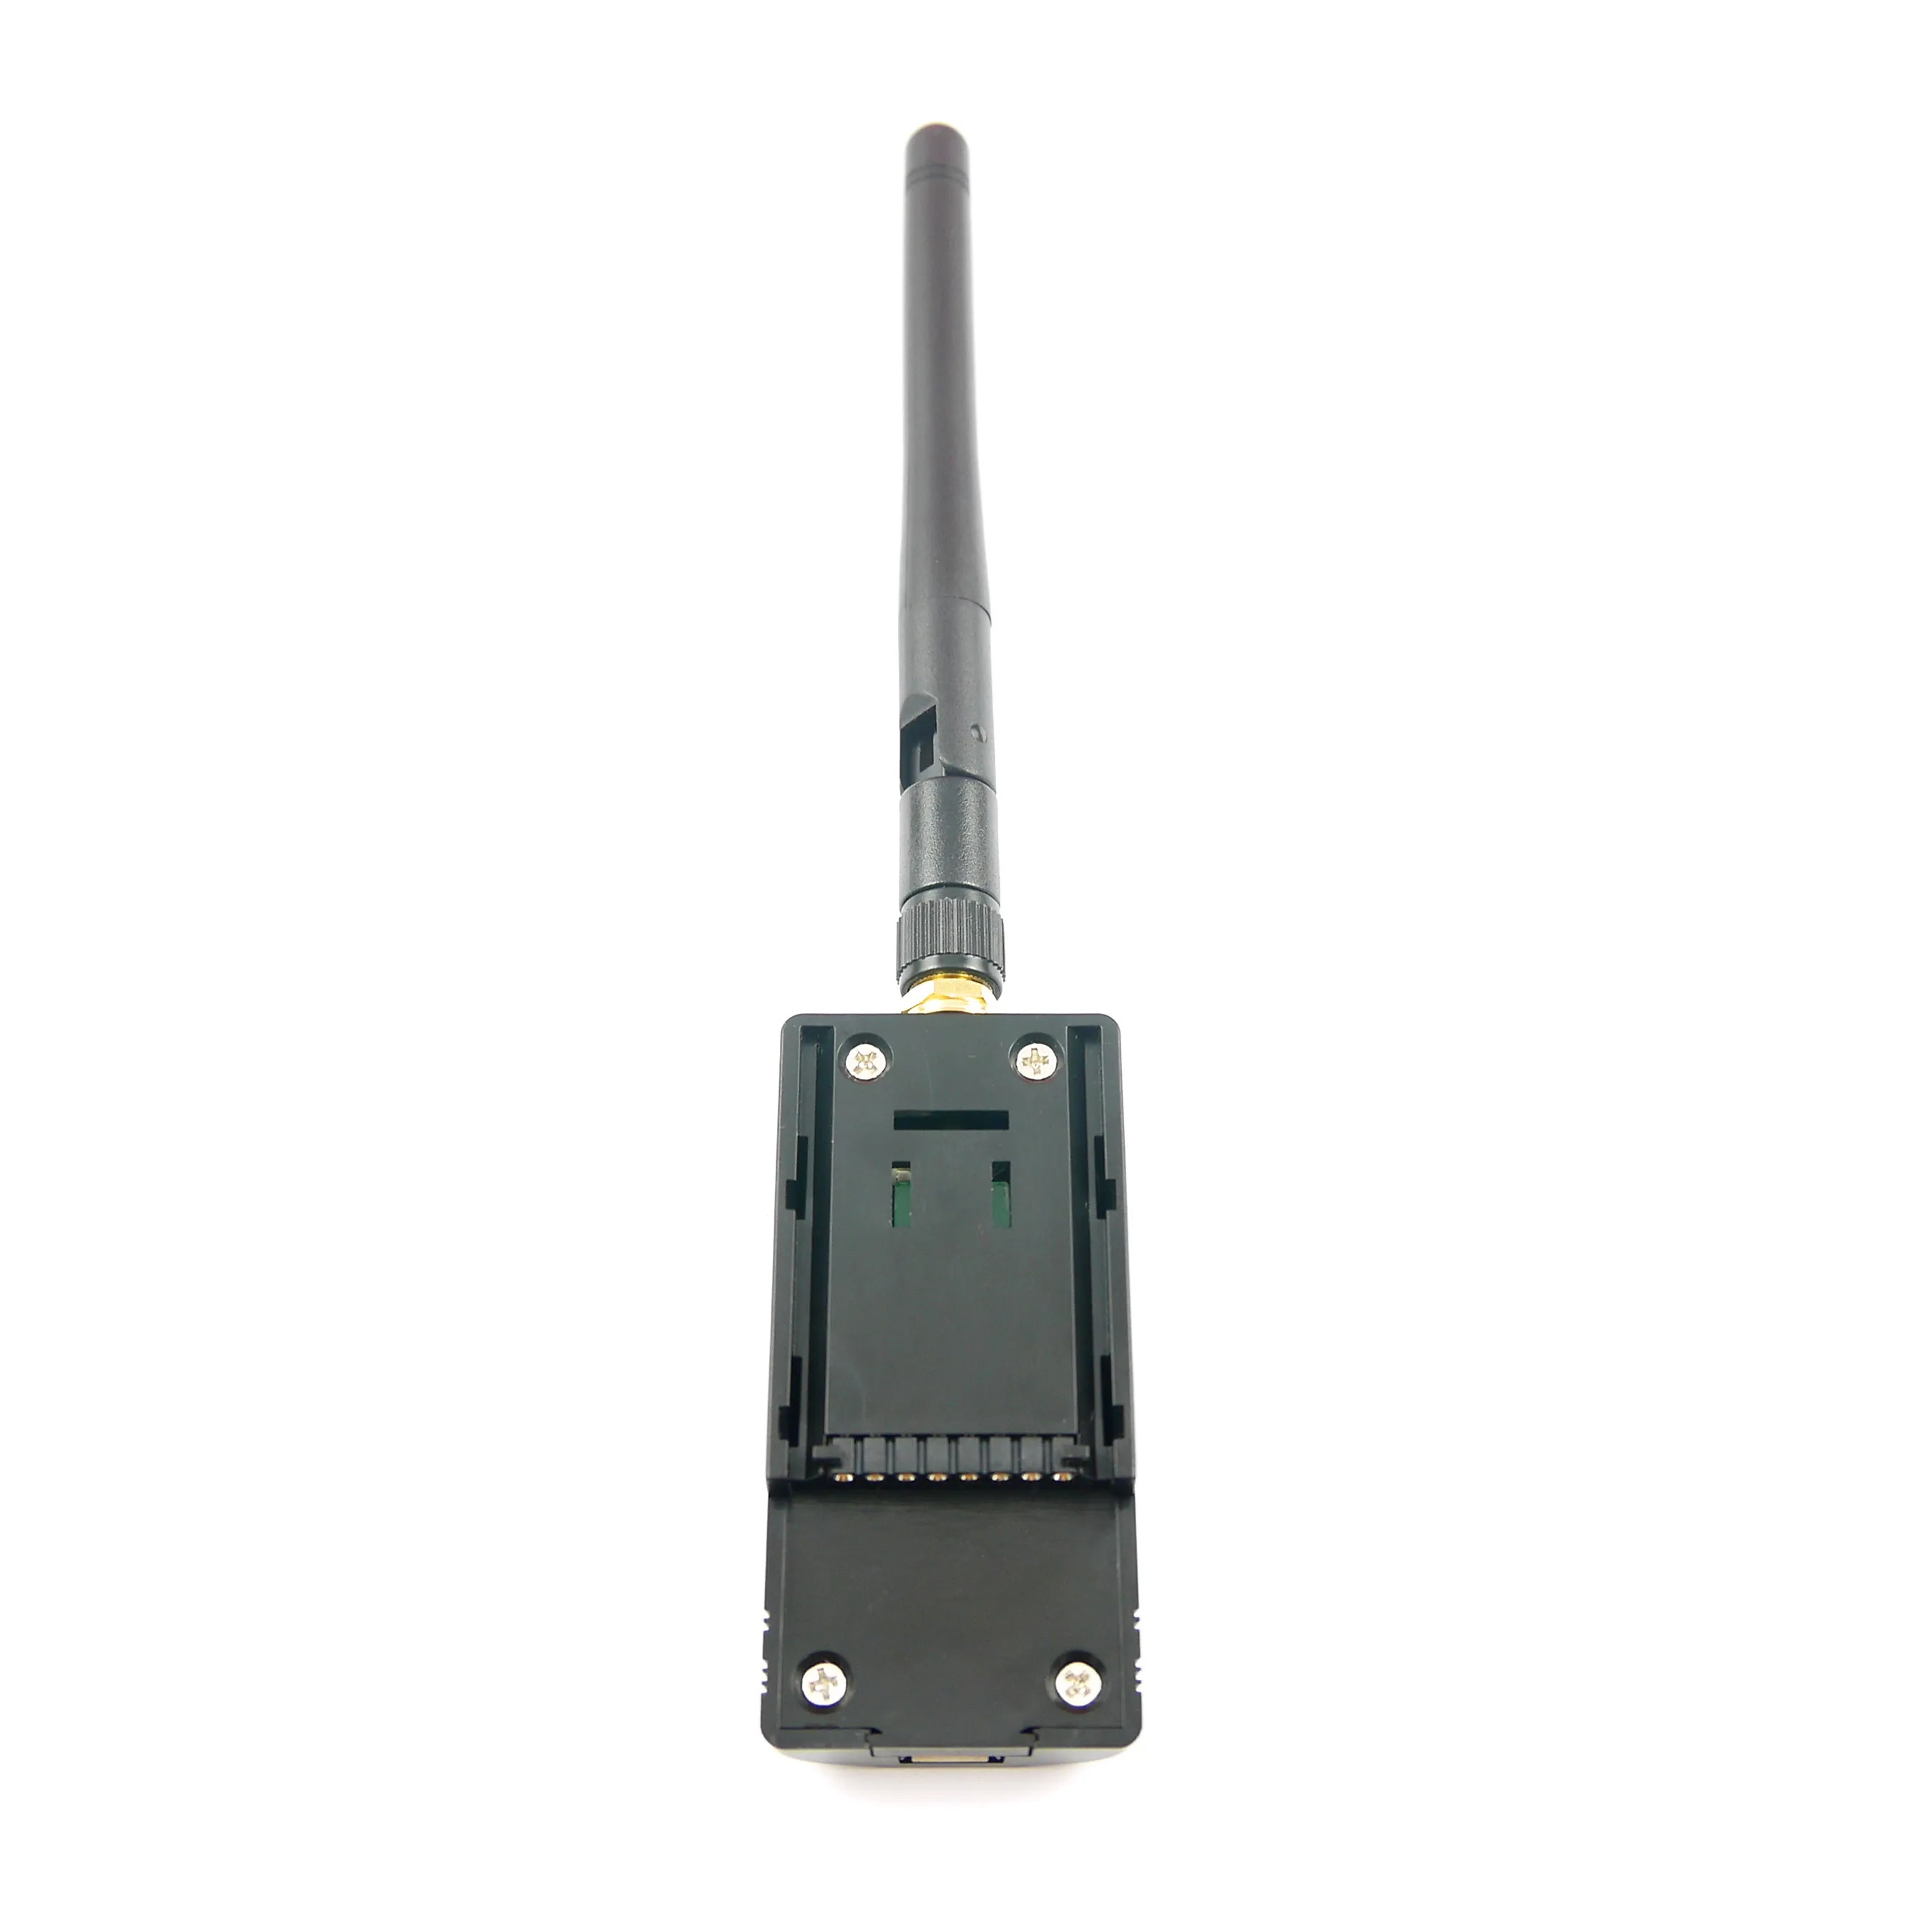 Buy FrSky IRX4 LITE 2.4G Transmitter Module 4 in i Multi-protocol Tuner With Antenna for X-Lite Walkera FlySky FS DSM2 SFHSS TBS on